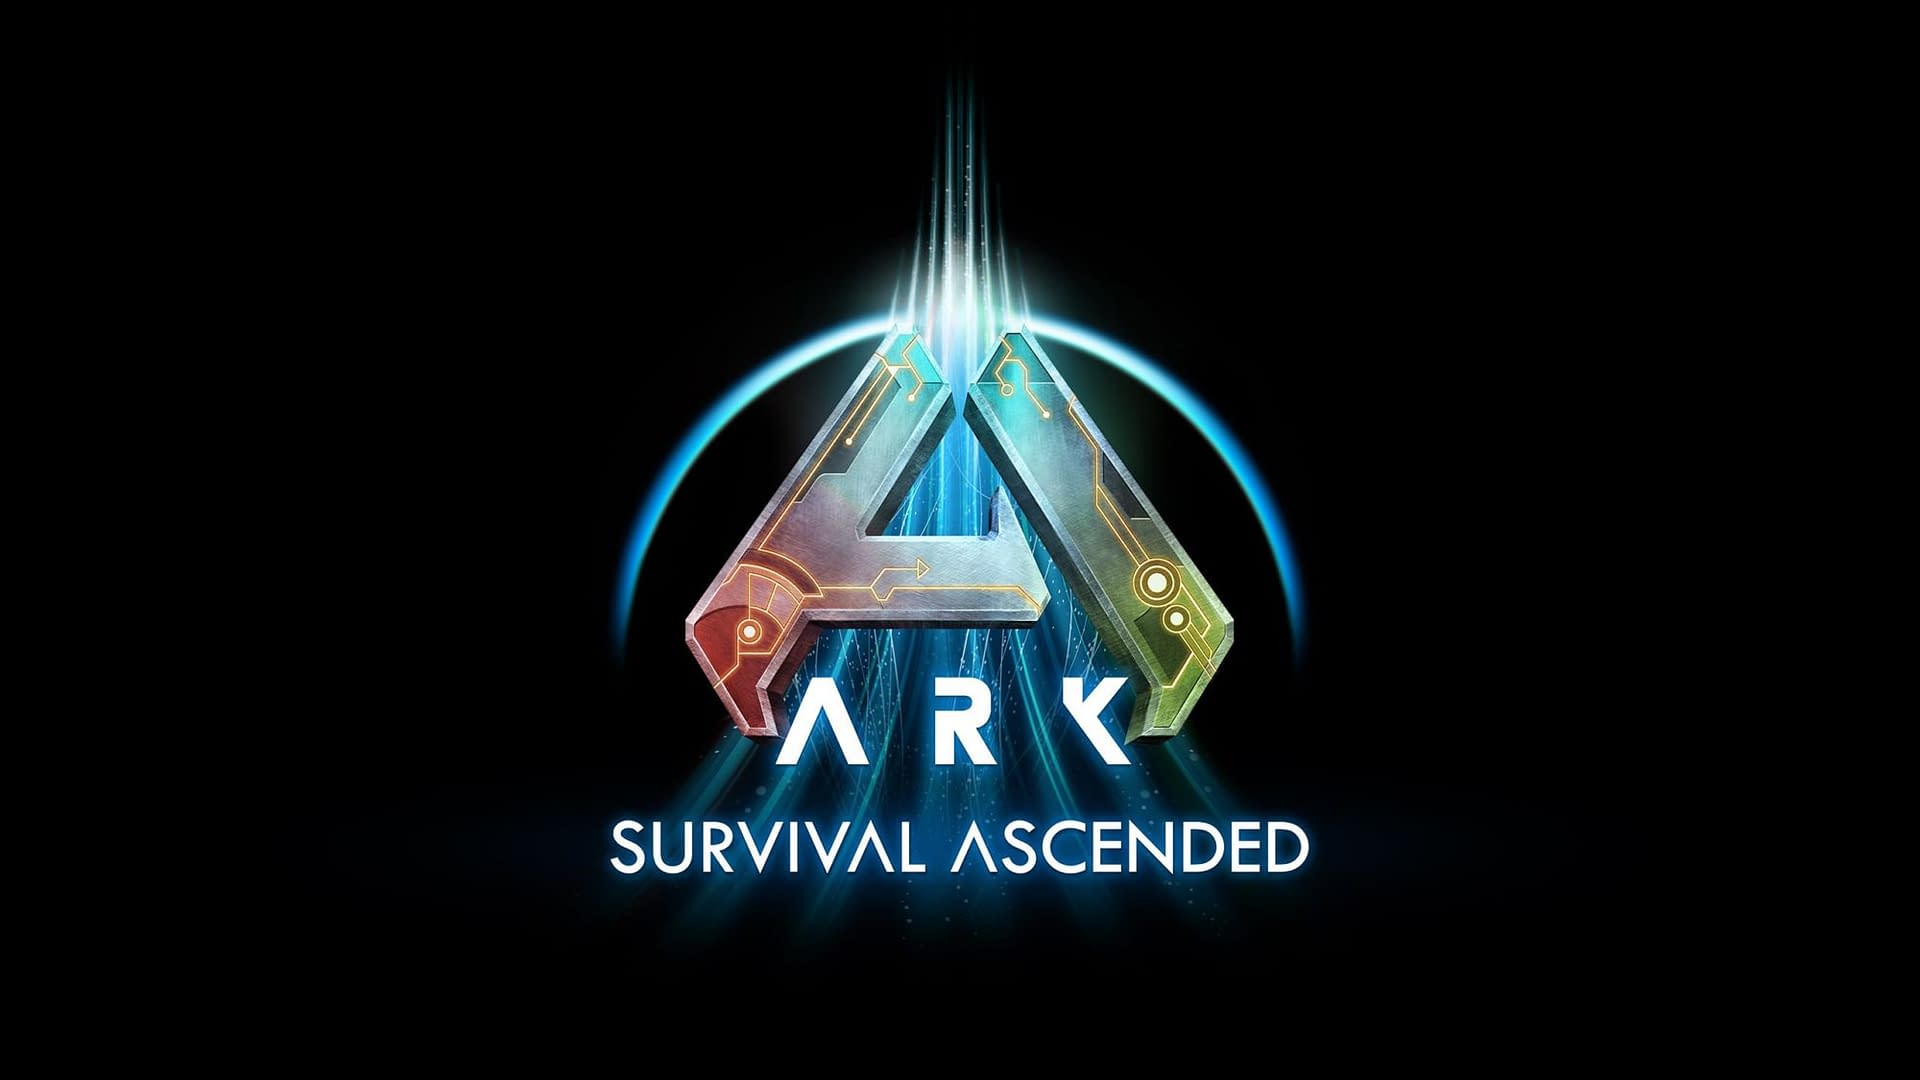 Ark 2 release date, Pre-orders, platforms, gameplay, and trailer